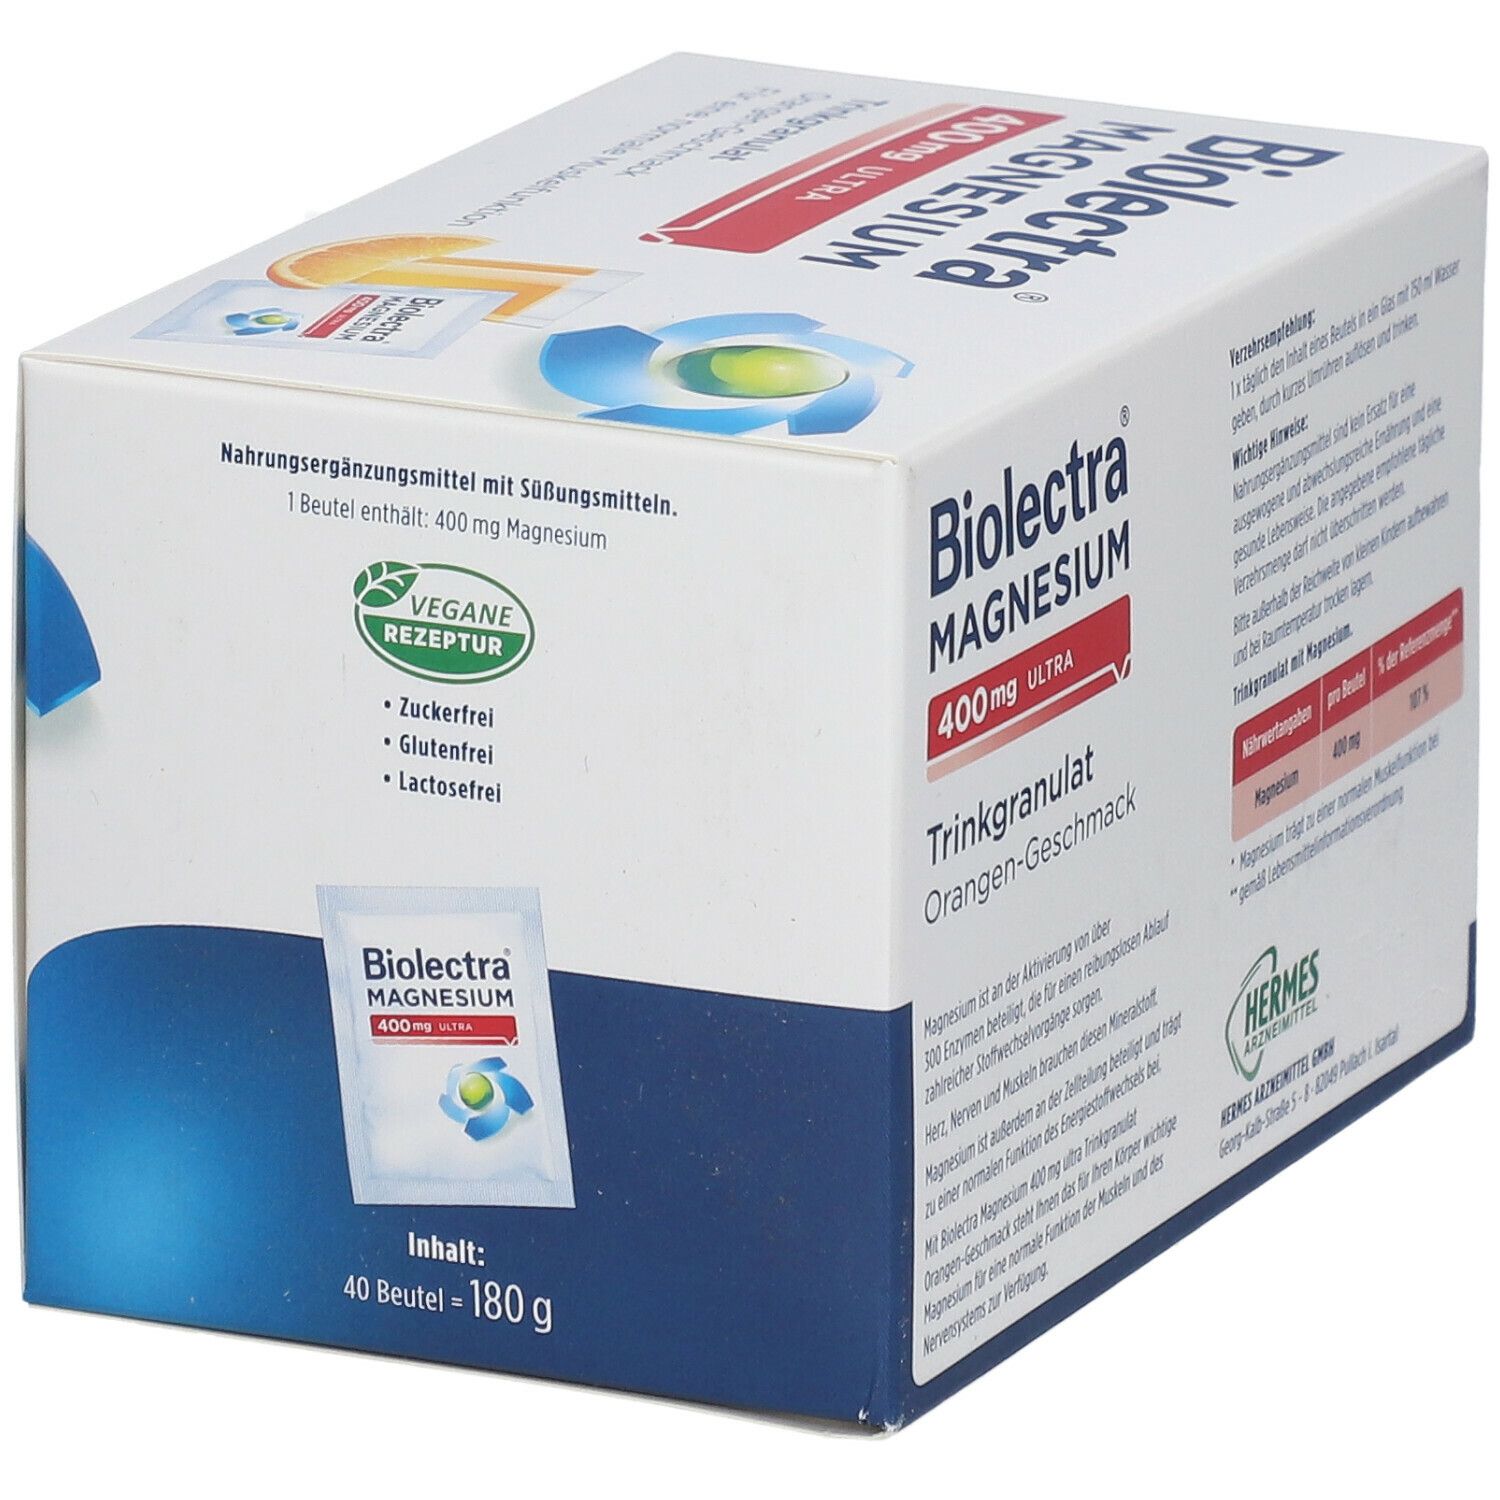 Biolectra® Magnesium 400 mg ultra Trinkgranulat Orange